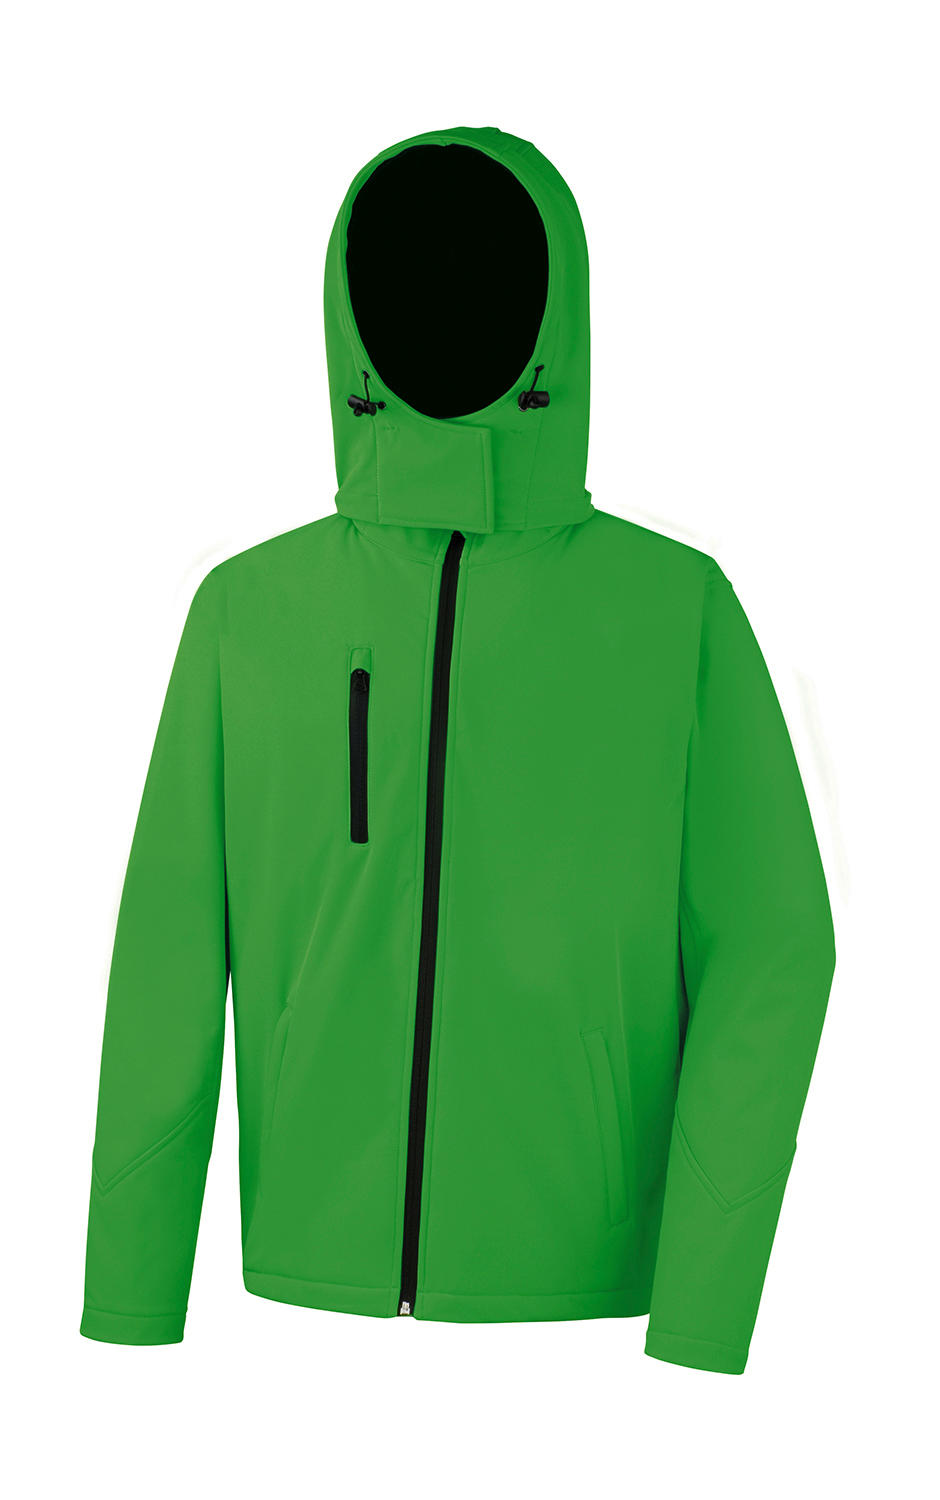  TX Performance Hooded Softshell Jacket in Farbe Vivid Green/Black